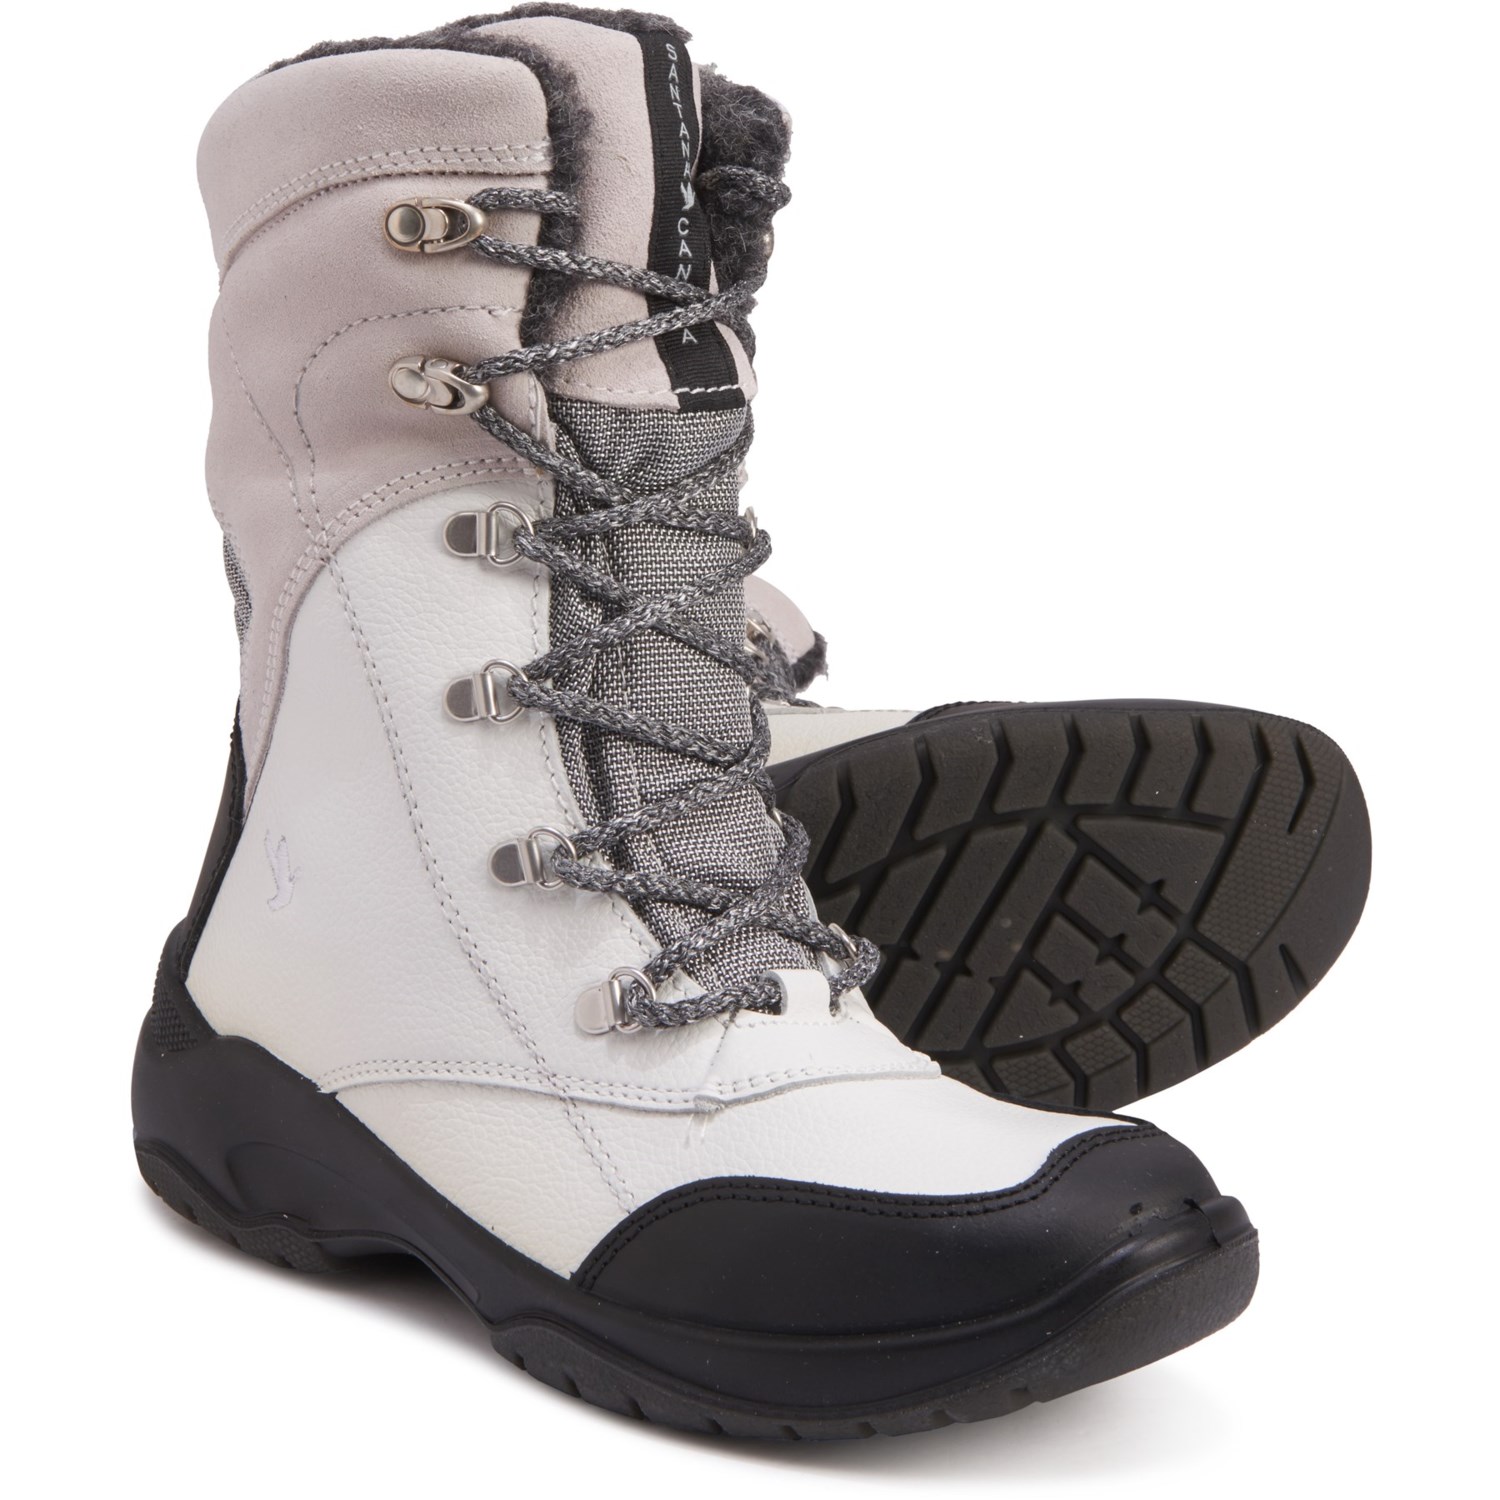 white waterproof boots